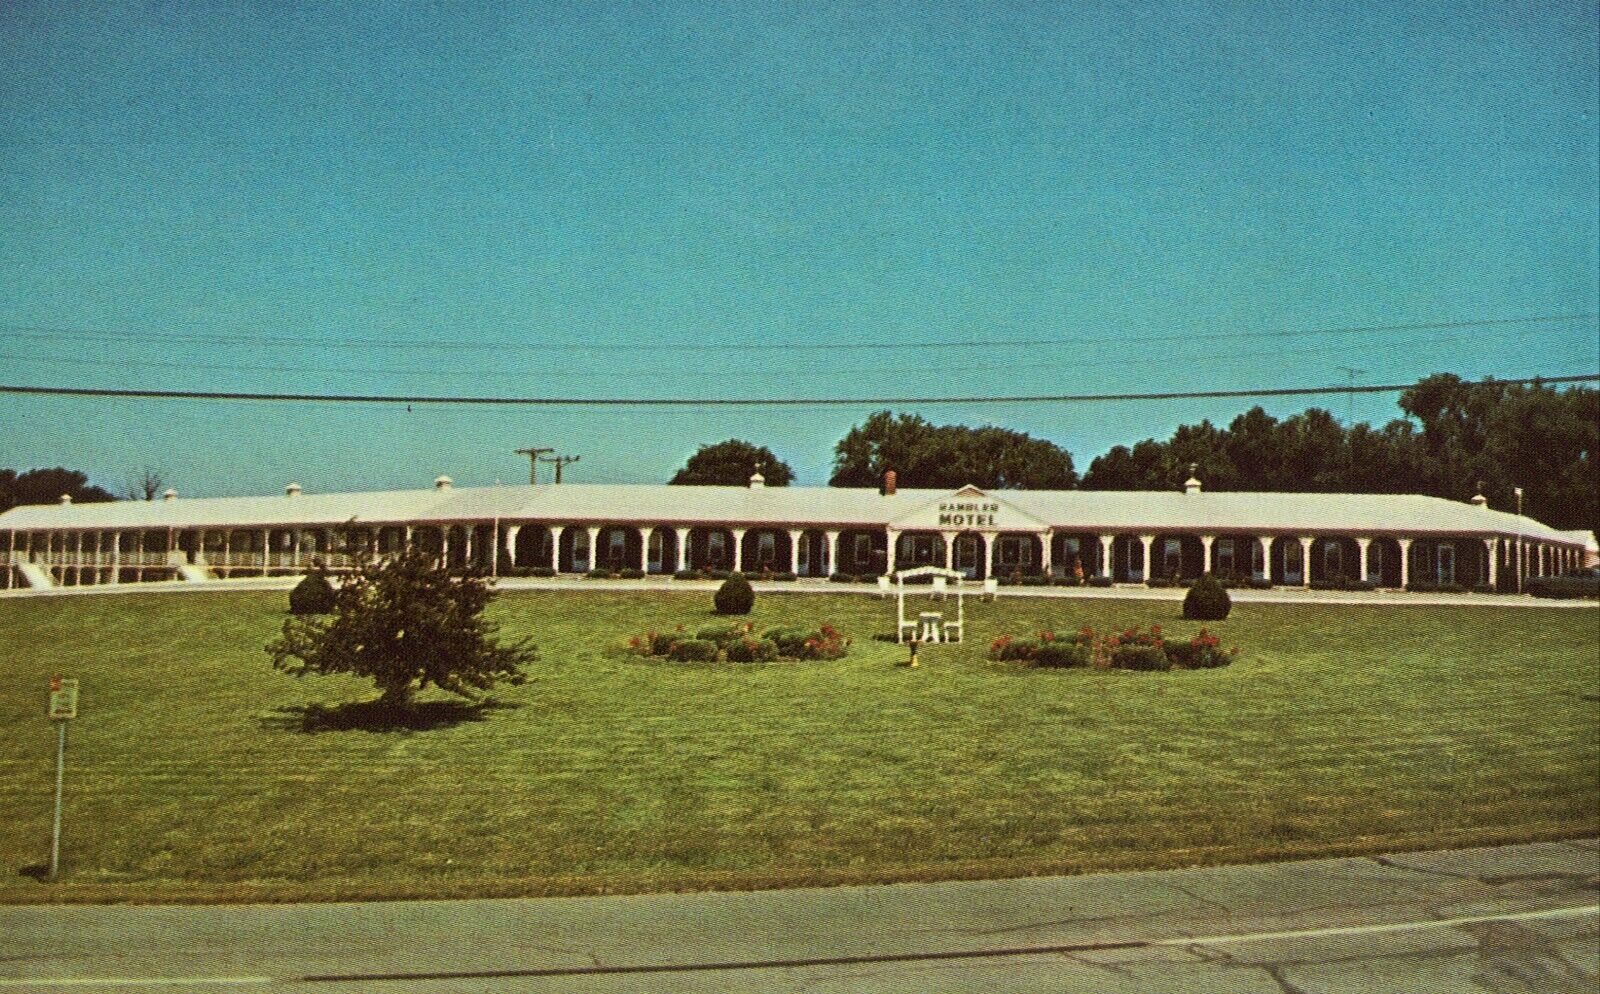 Rambler Motel & Restaurant - Cameron, Missouri Vintage Postcard